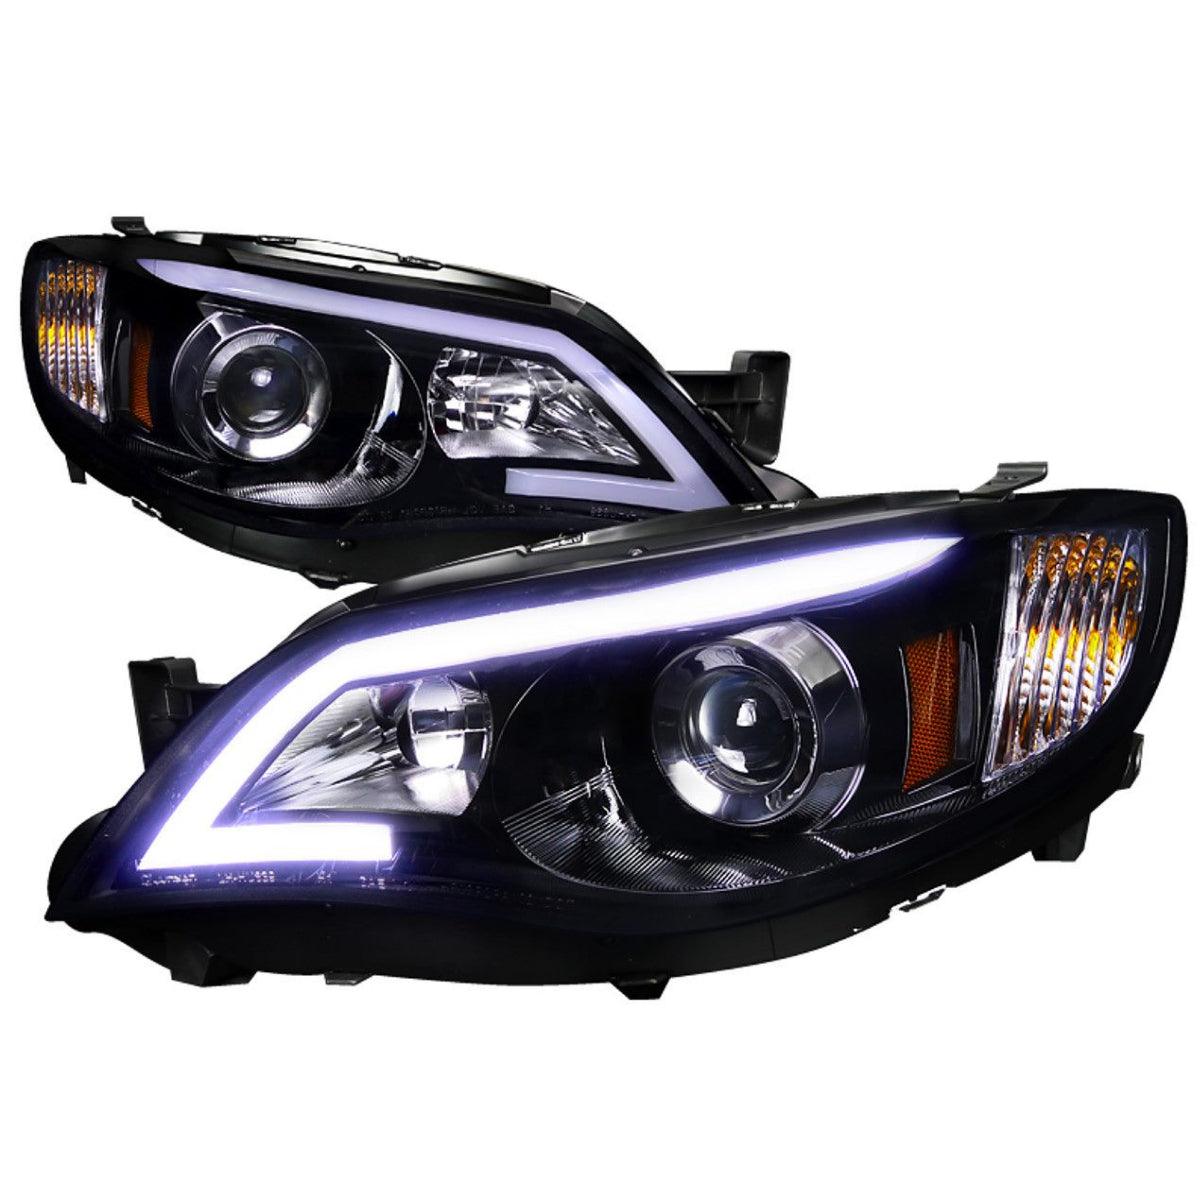 Spec D BLK Edition Headlights Neon Bar to fit Impreza WRX 08-14 GR GE HeadlightsProlink Performance